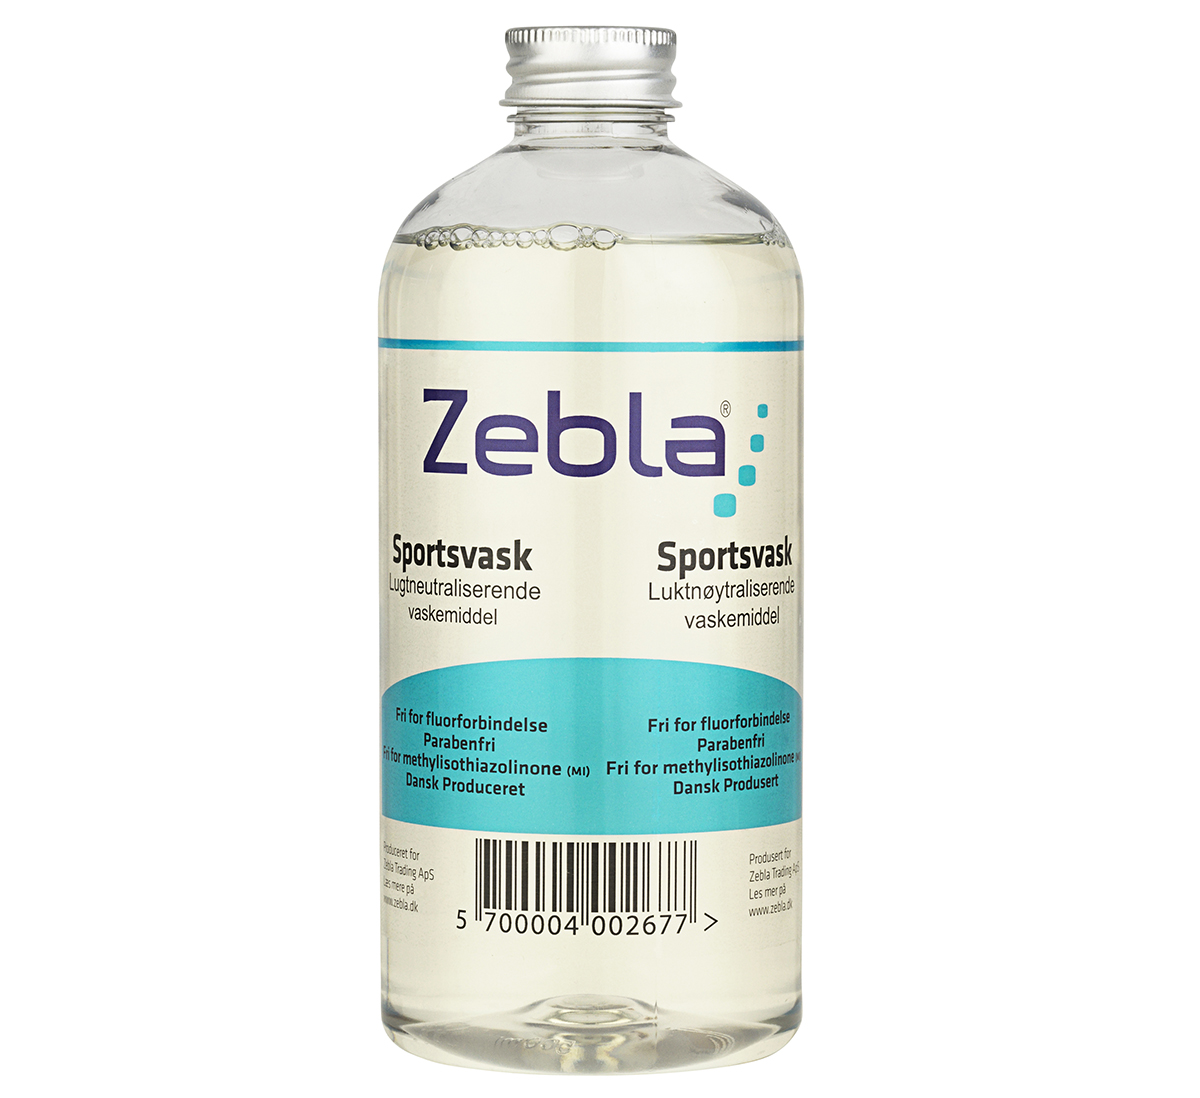 Zebla sportsvask 500 ml